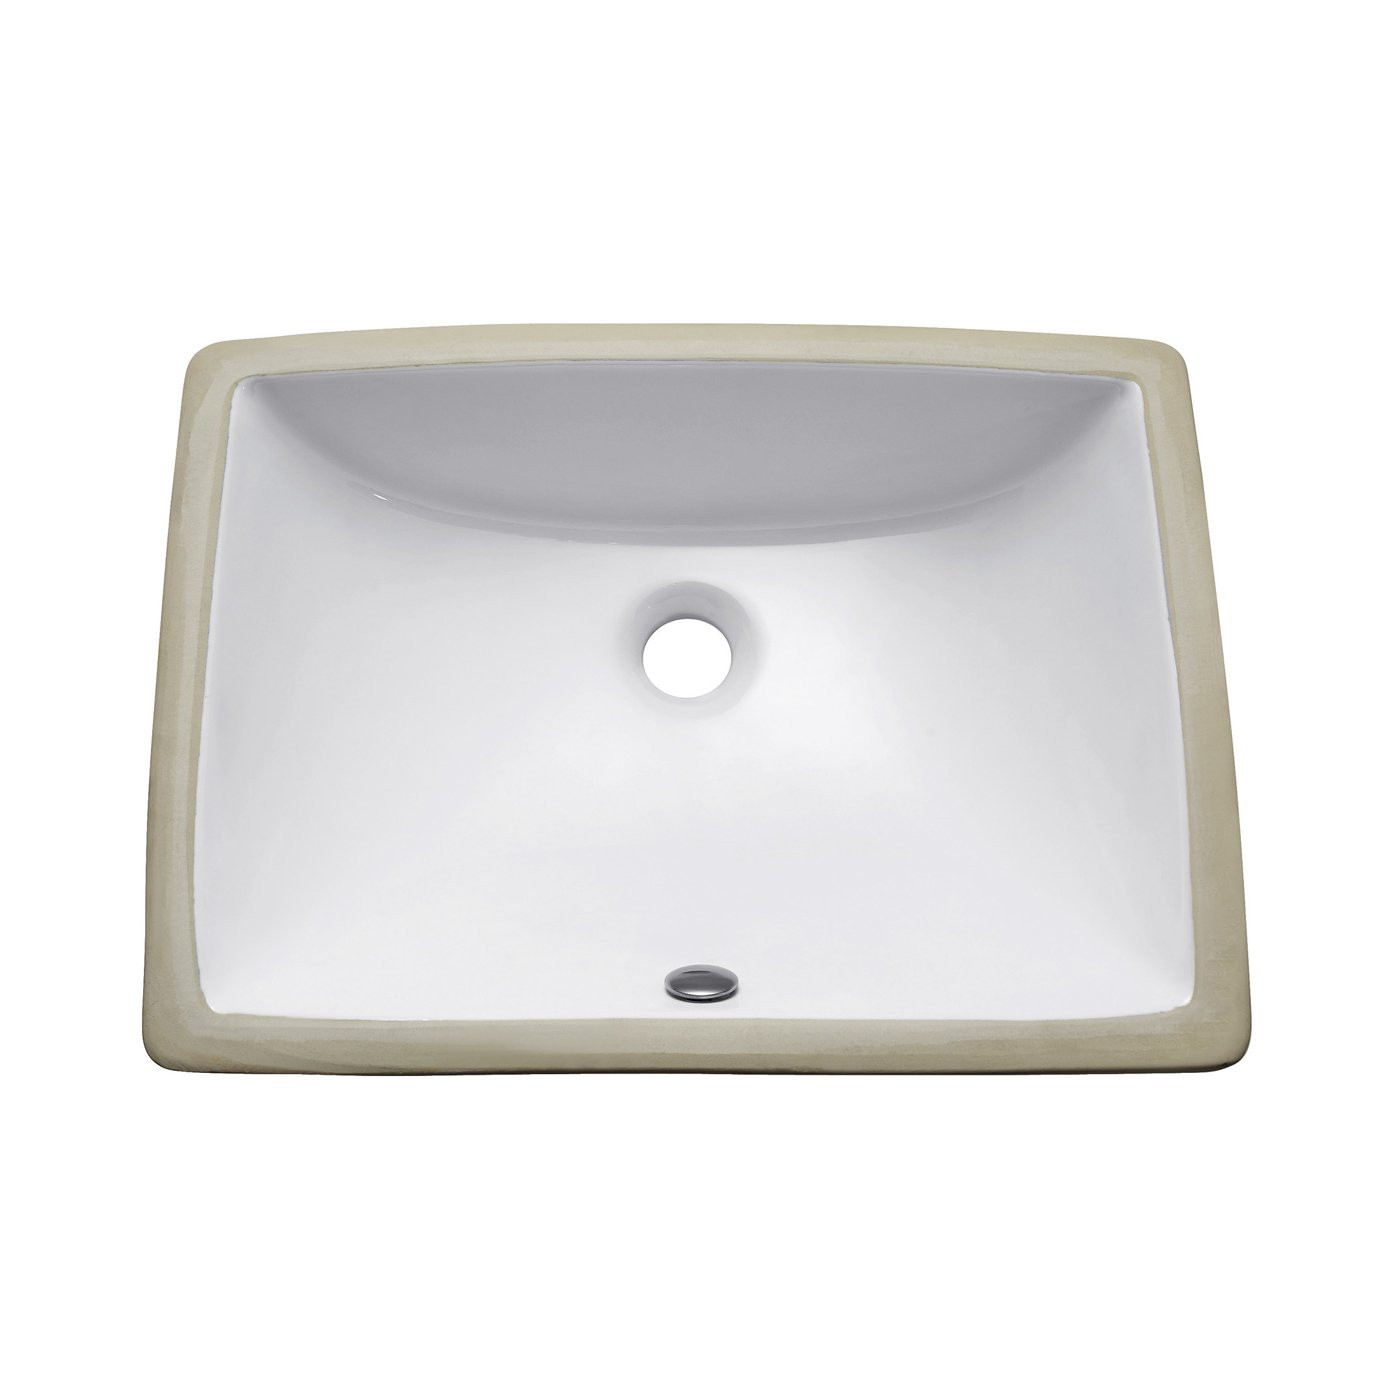 Best ideas about Lowes Bathroom Sinks
. Save or Pin Avanity CUM20WT R Undermount Bathroom Sink Now.